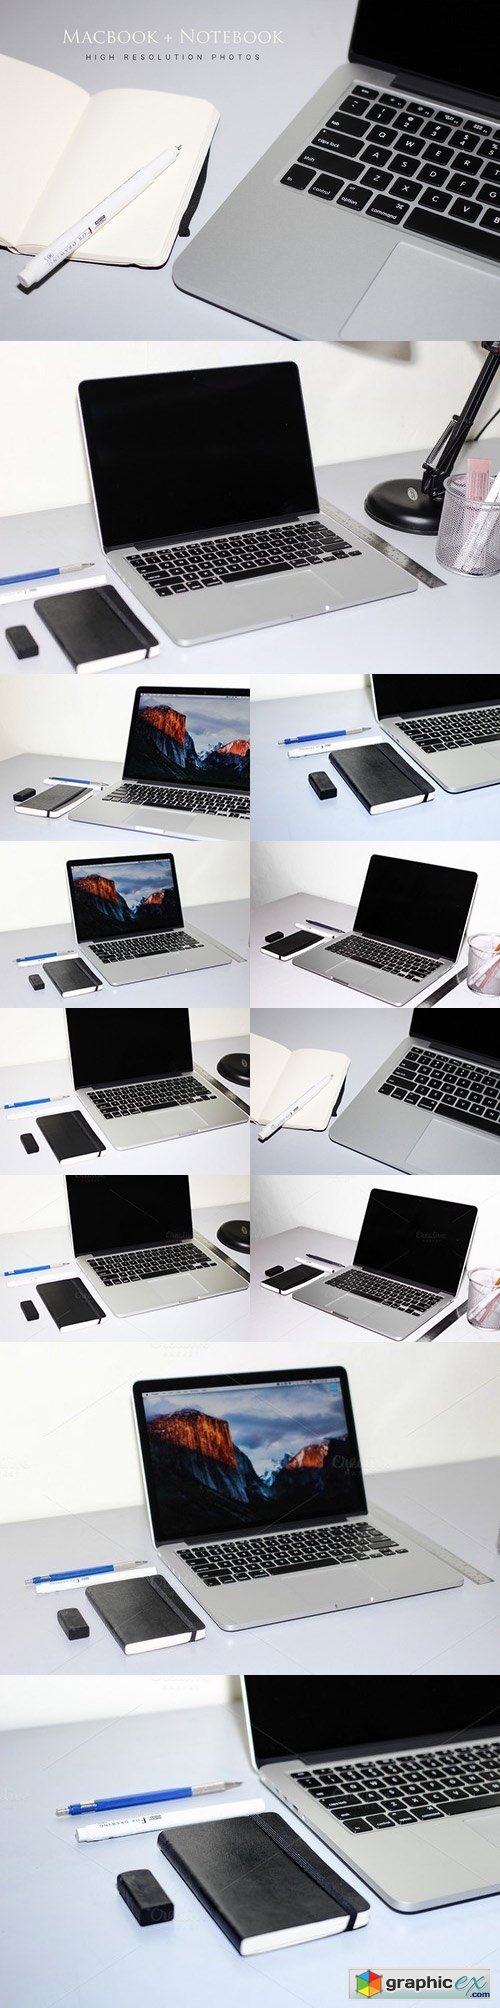 Macbook Pro + Notebook - 7 Photos